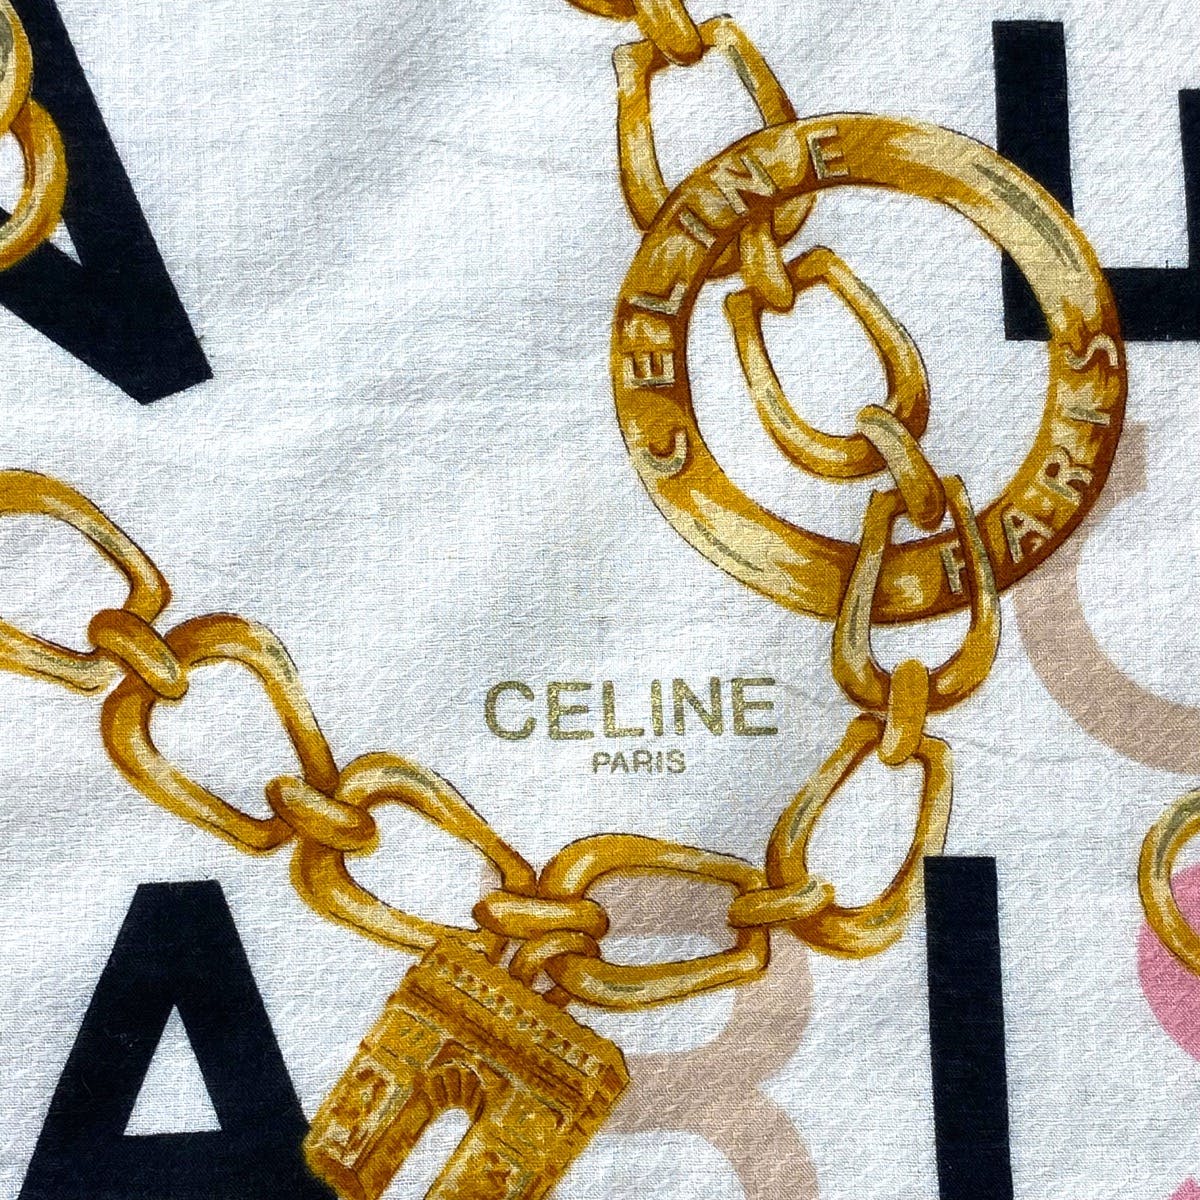 Celine Paris Handkerchief Neckerchief Bandana Headband - 6